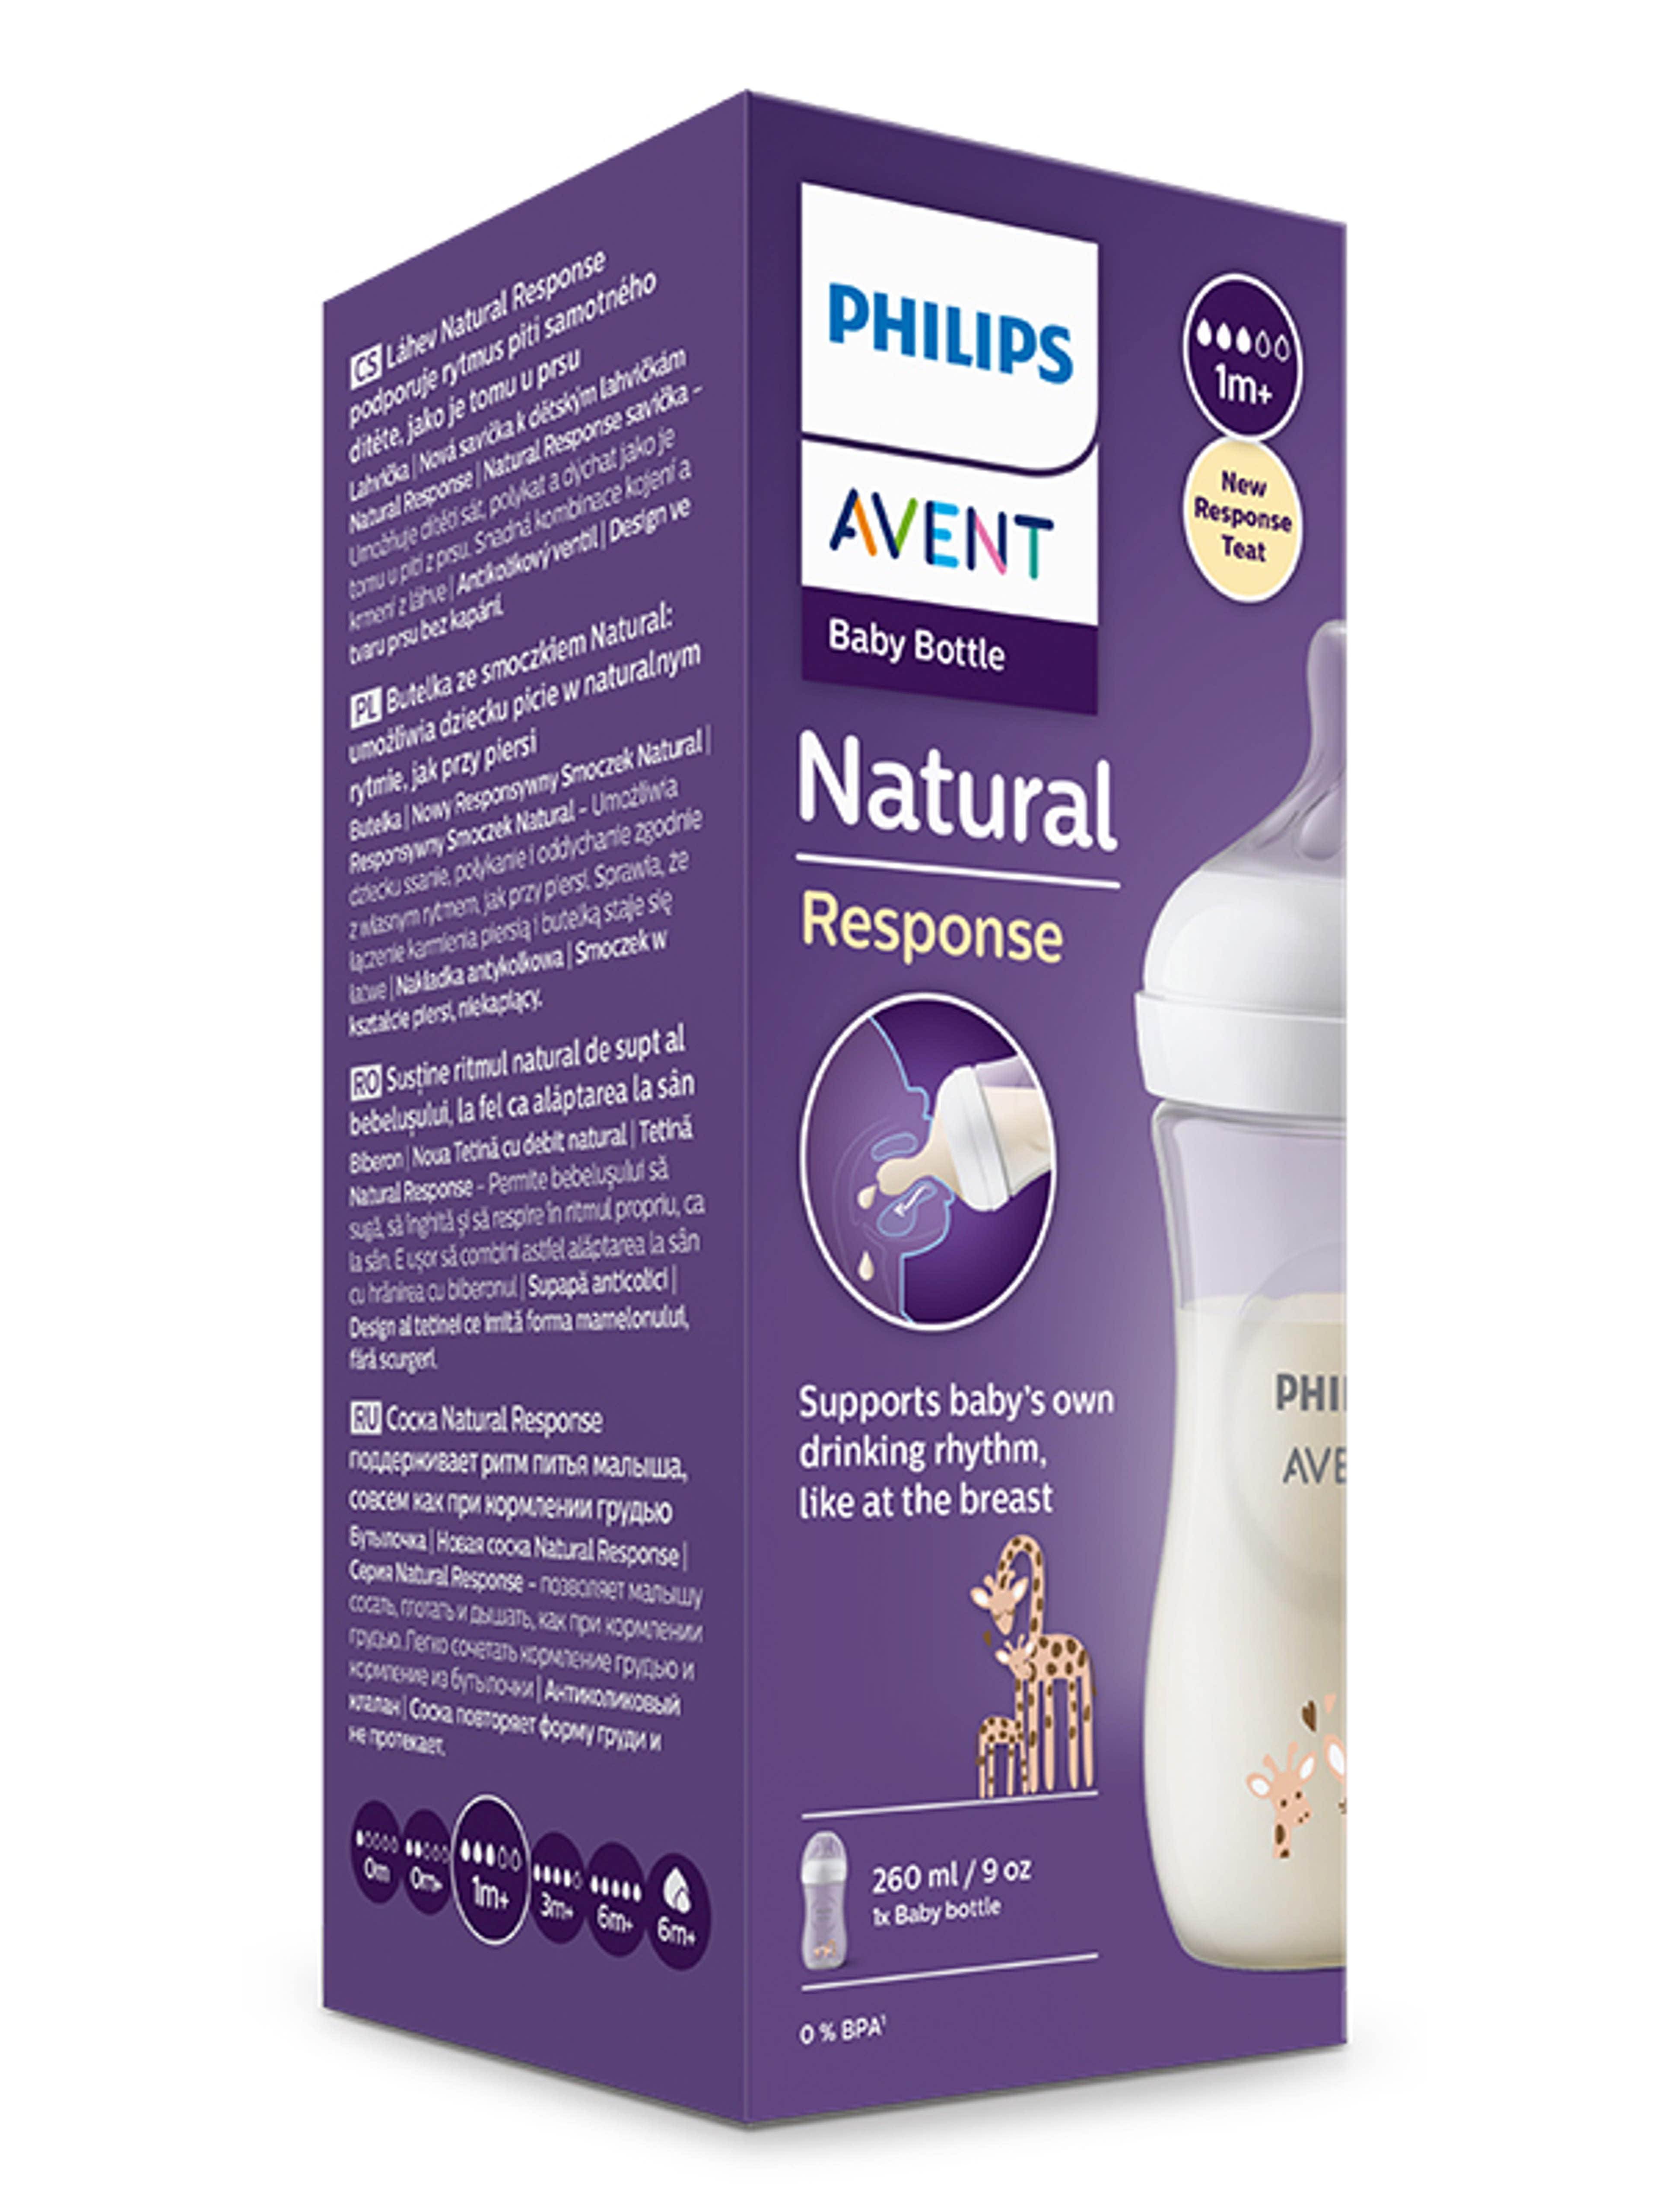 Philips Avent Natural Response cumisüveg 3 hónapos kortól 260 ml - 1 db-3